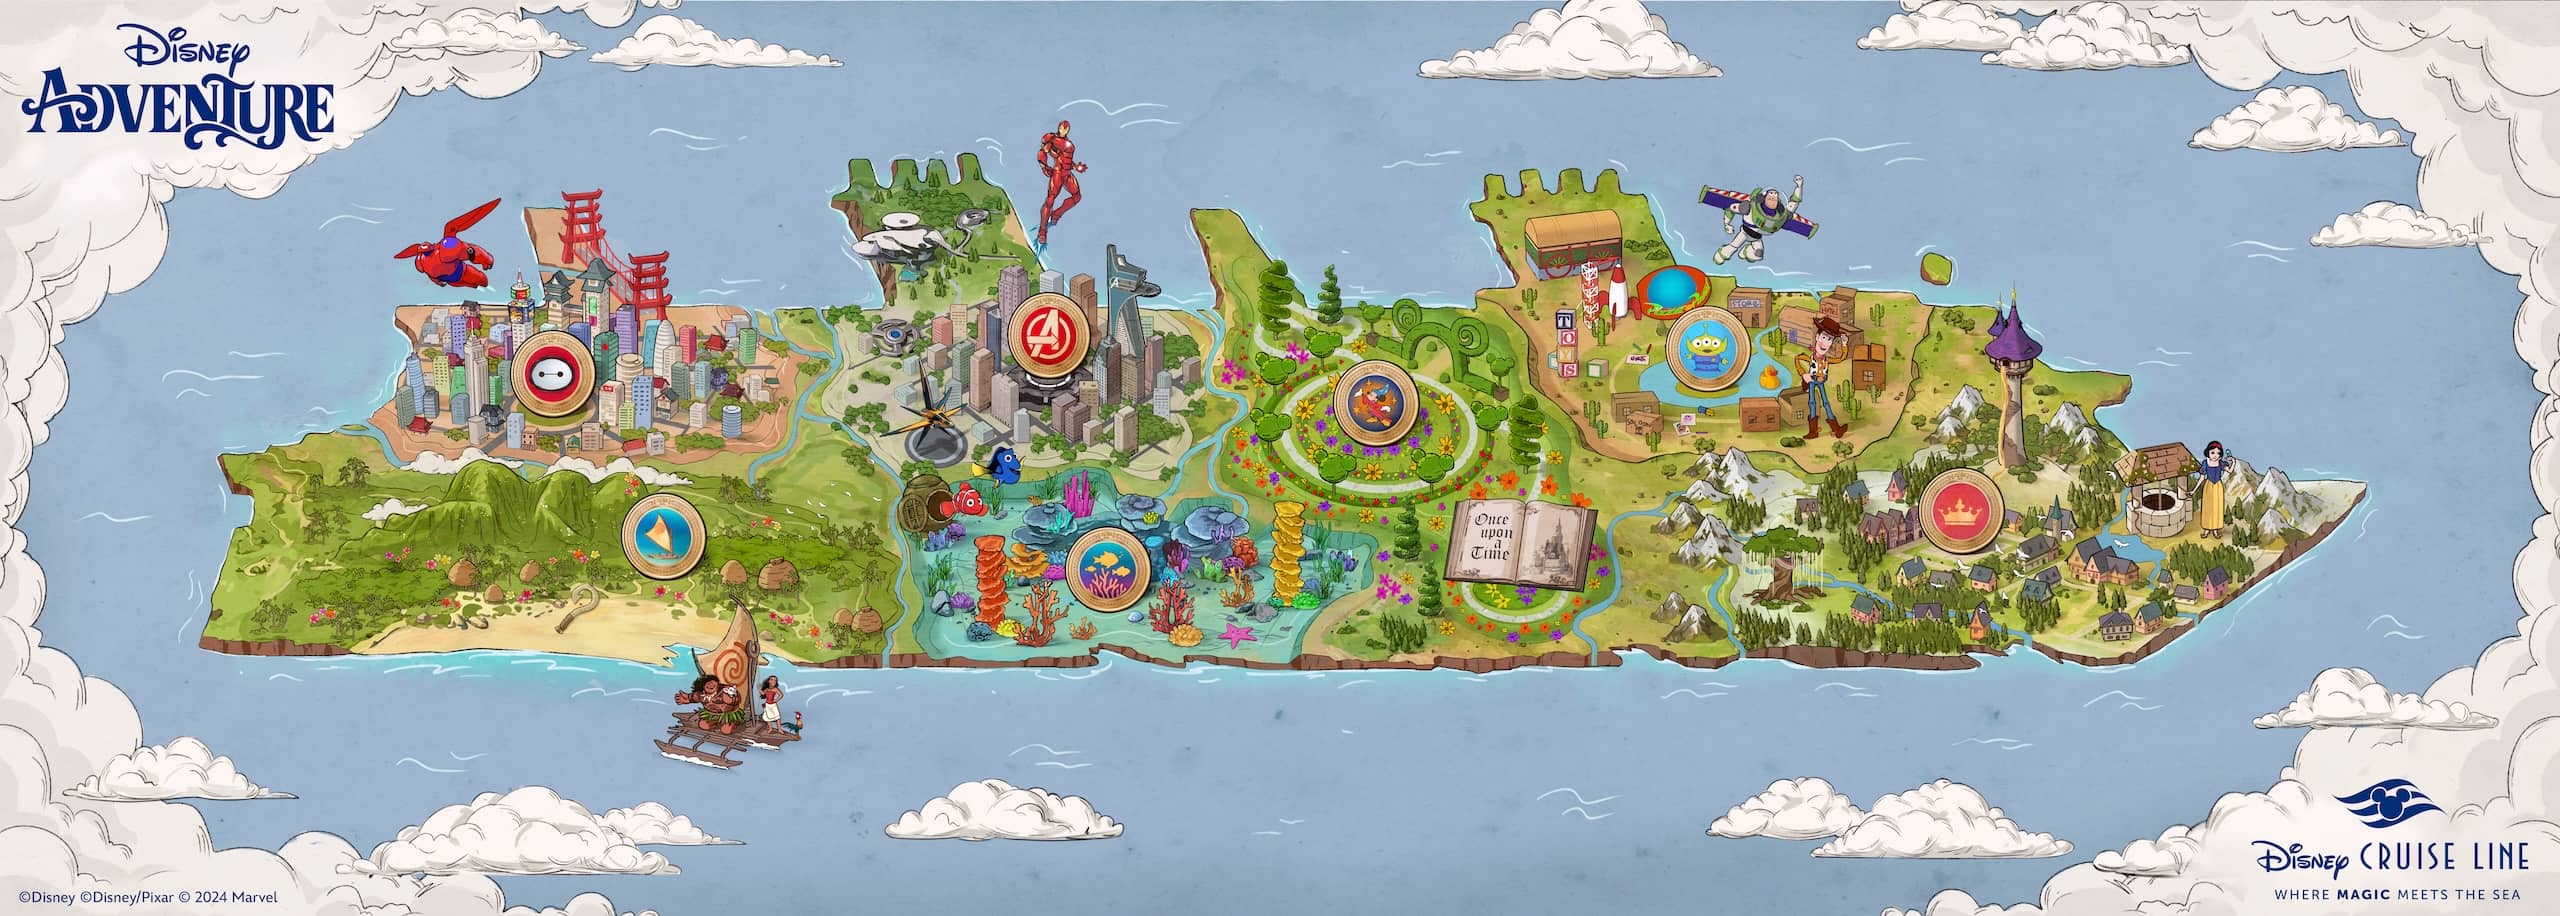 Disney Adventure map